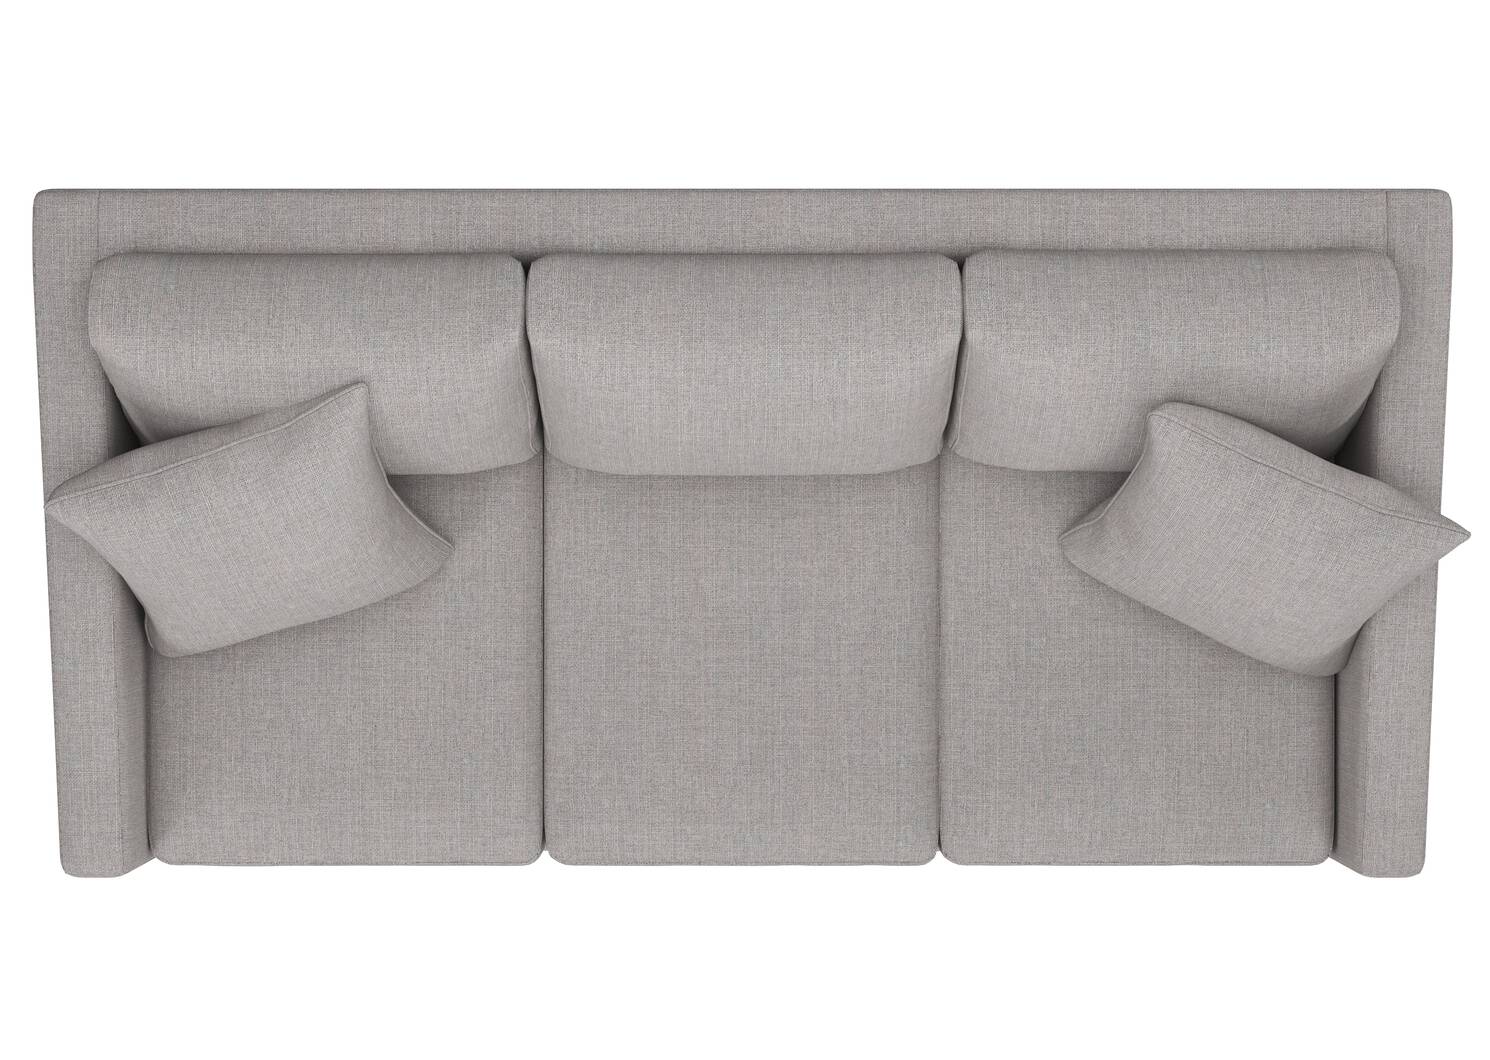 Hensley Custom Sofa